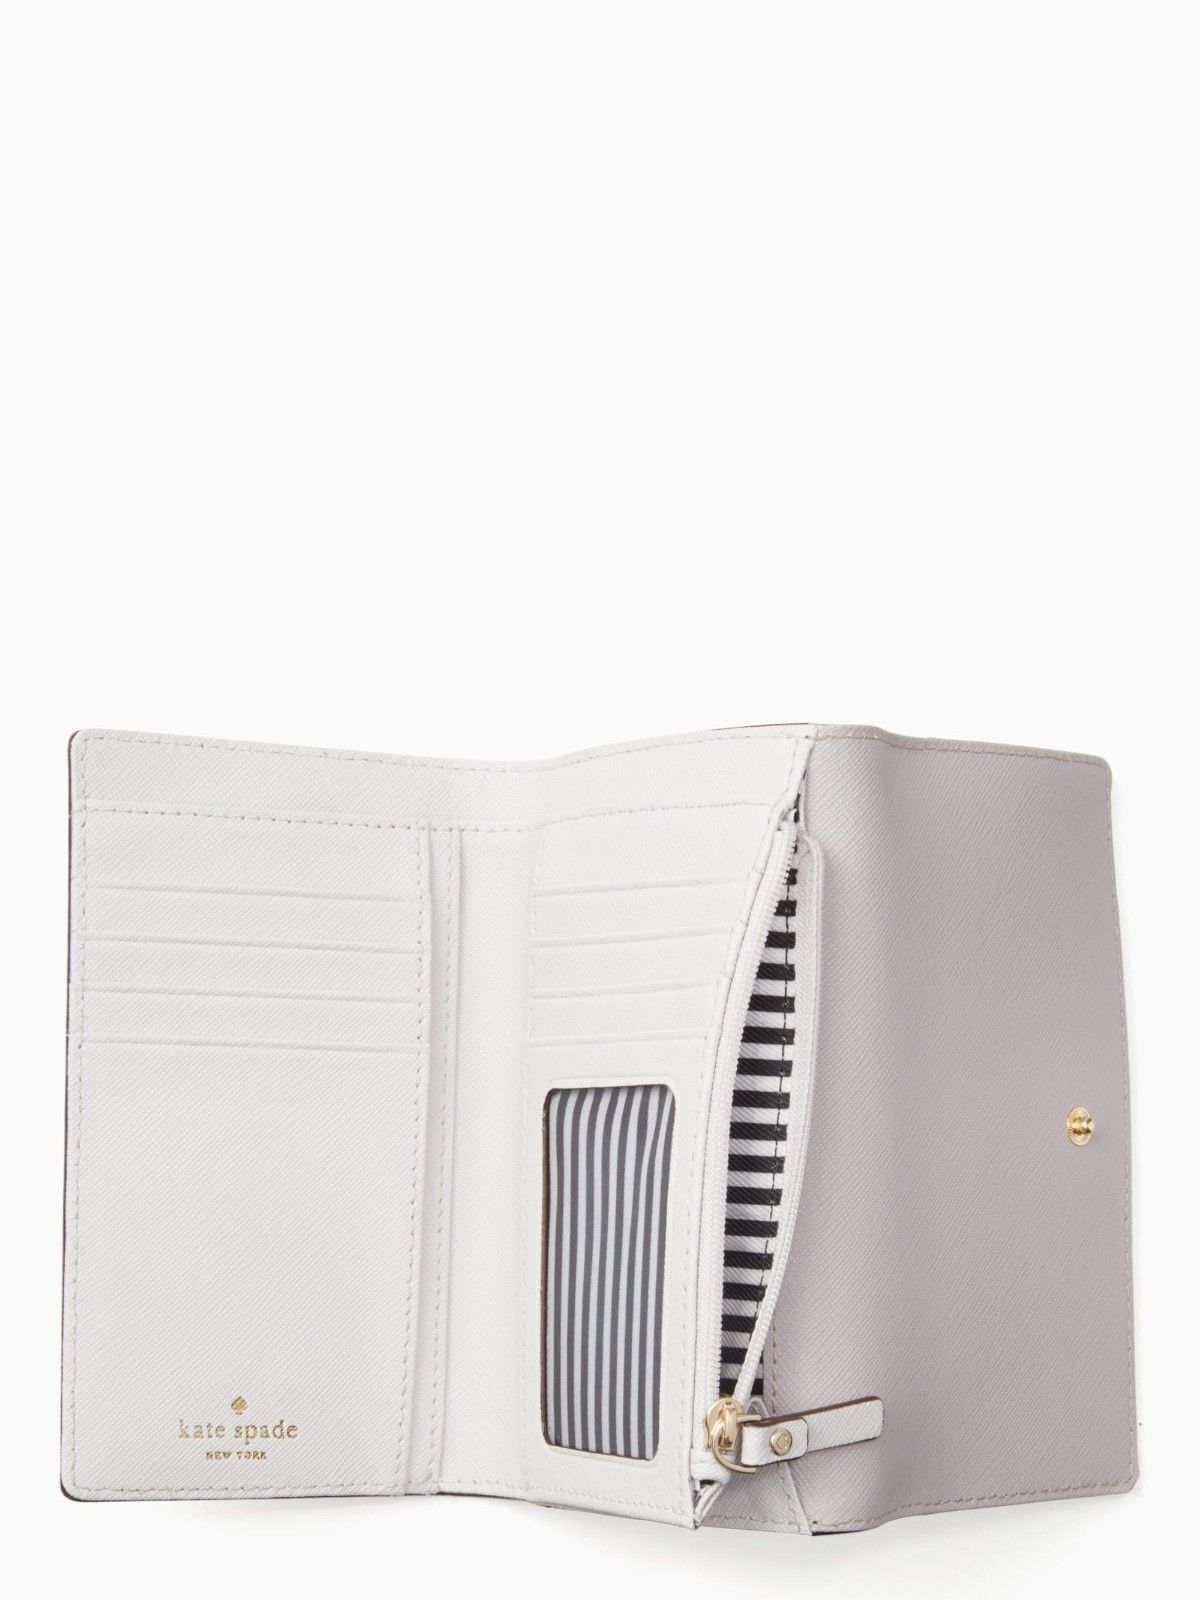 Brand New KATE SPADE Cameron Street Kieran Grey Blush Leather Wallet, MSRP  $158 | eBay